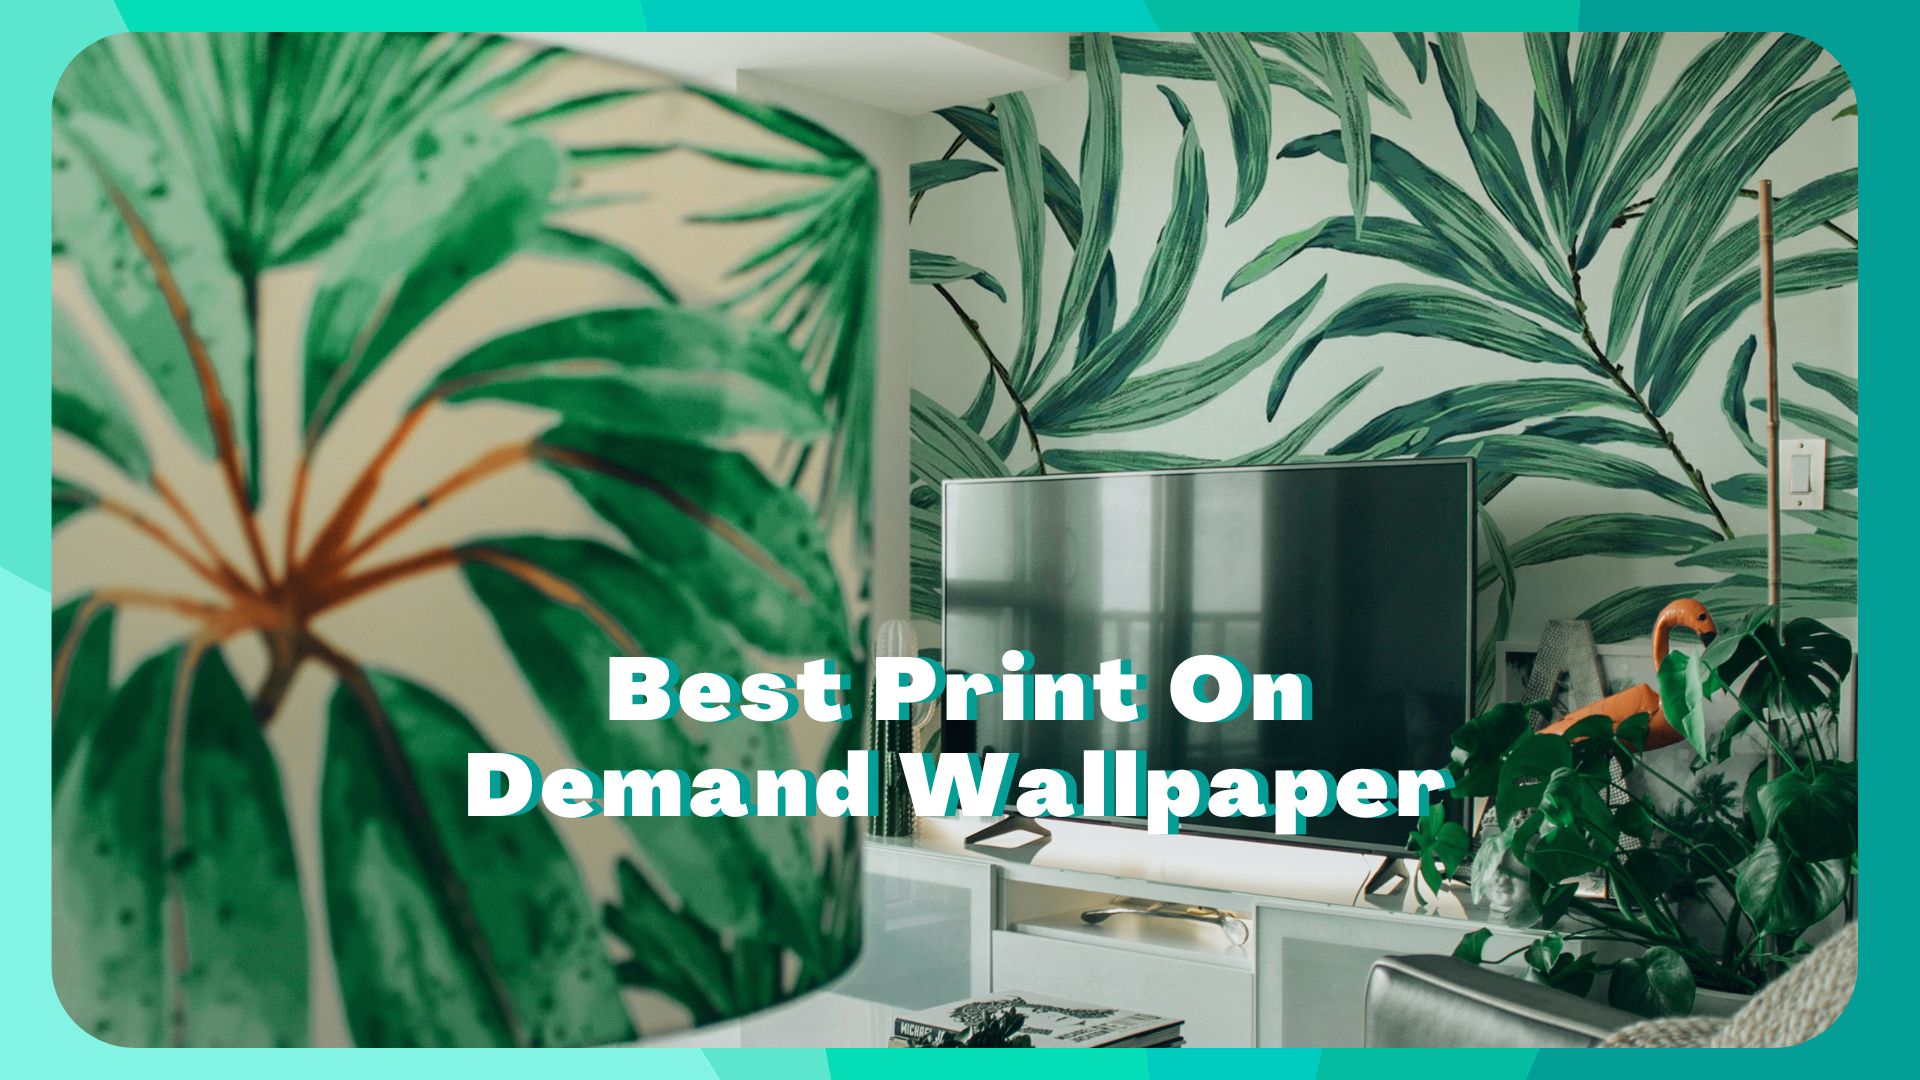 9 Print On Demand Wallpaper Companies EarnFreeCashOnline